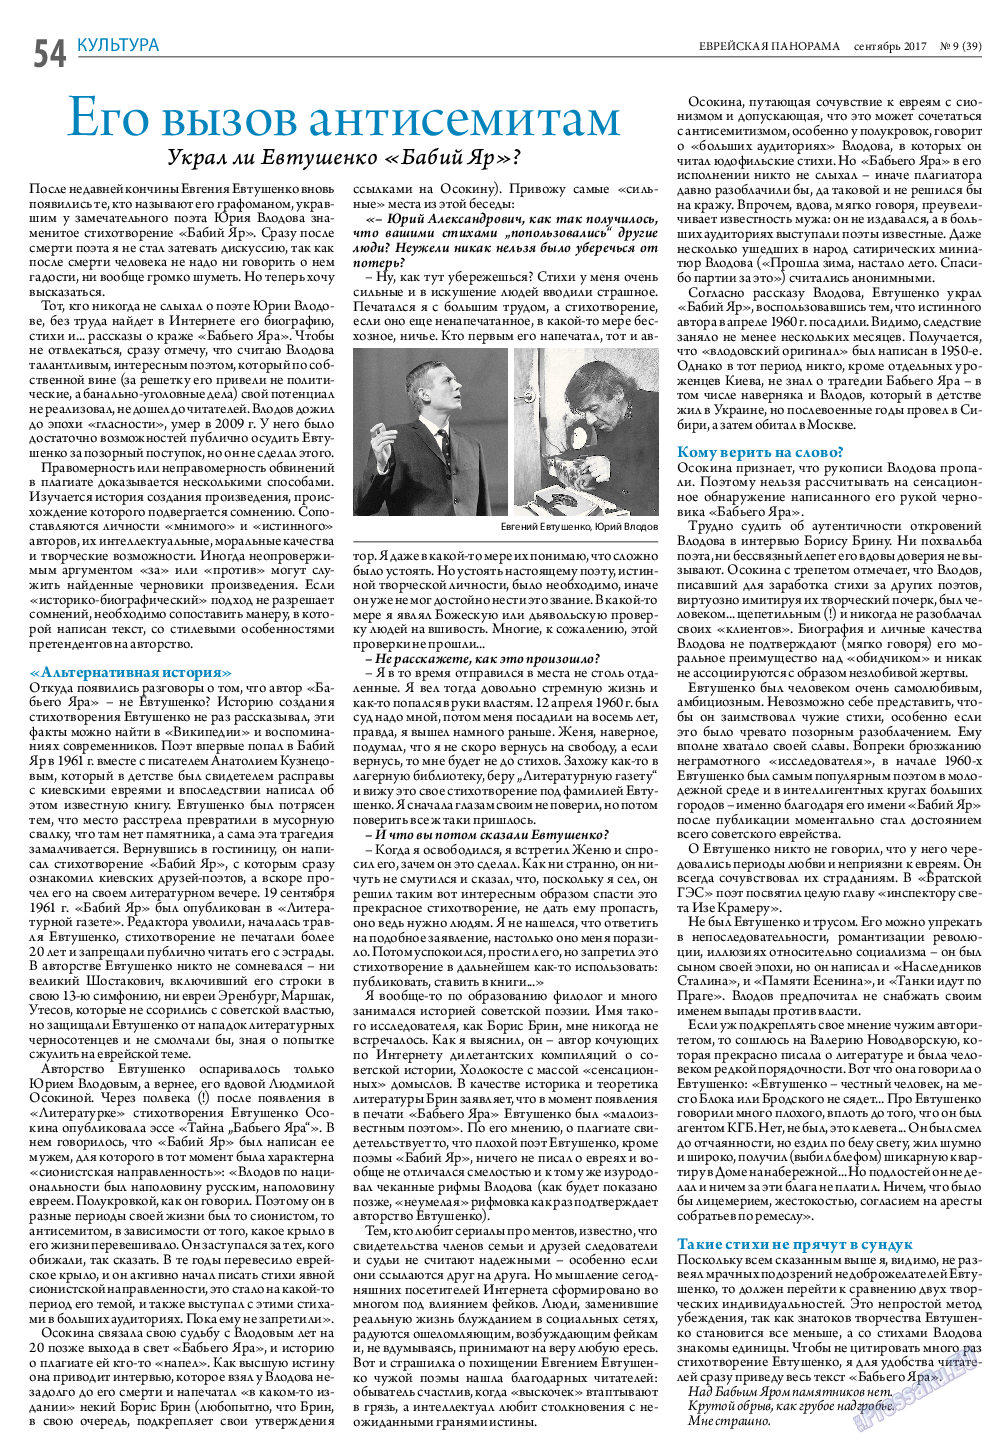 Еврейская панорама, газета. 2017 №9 стр.54